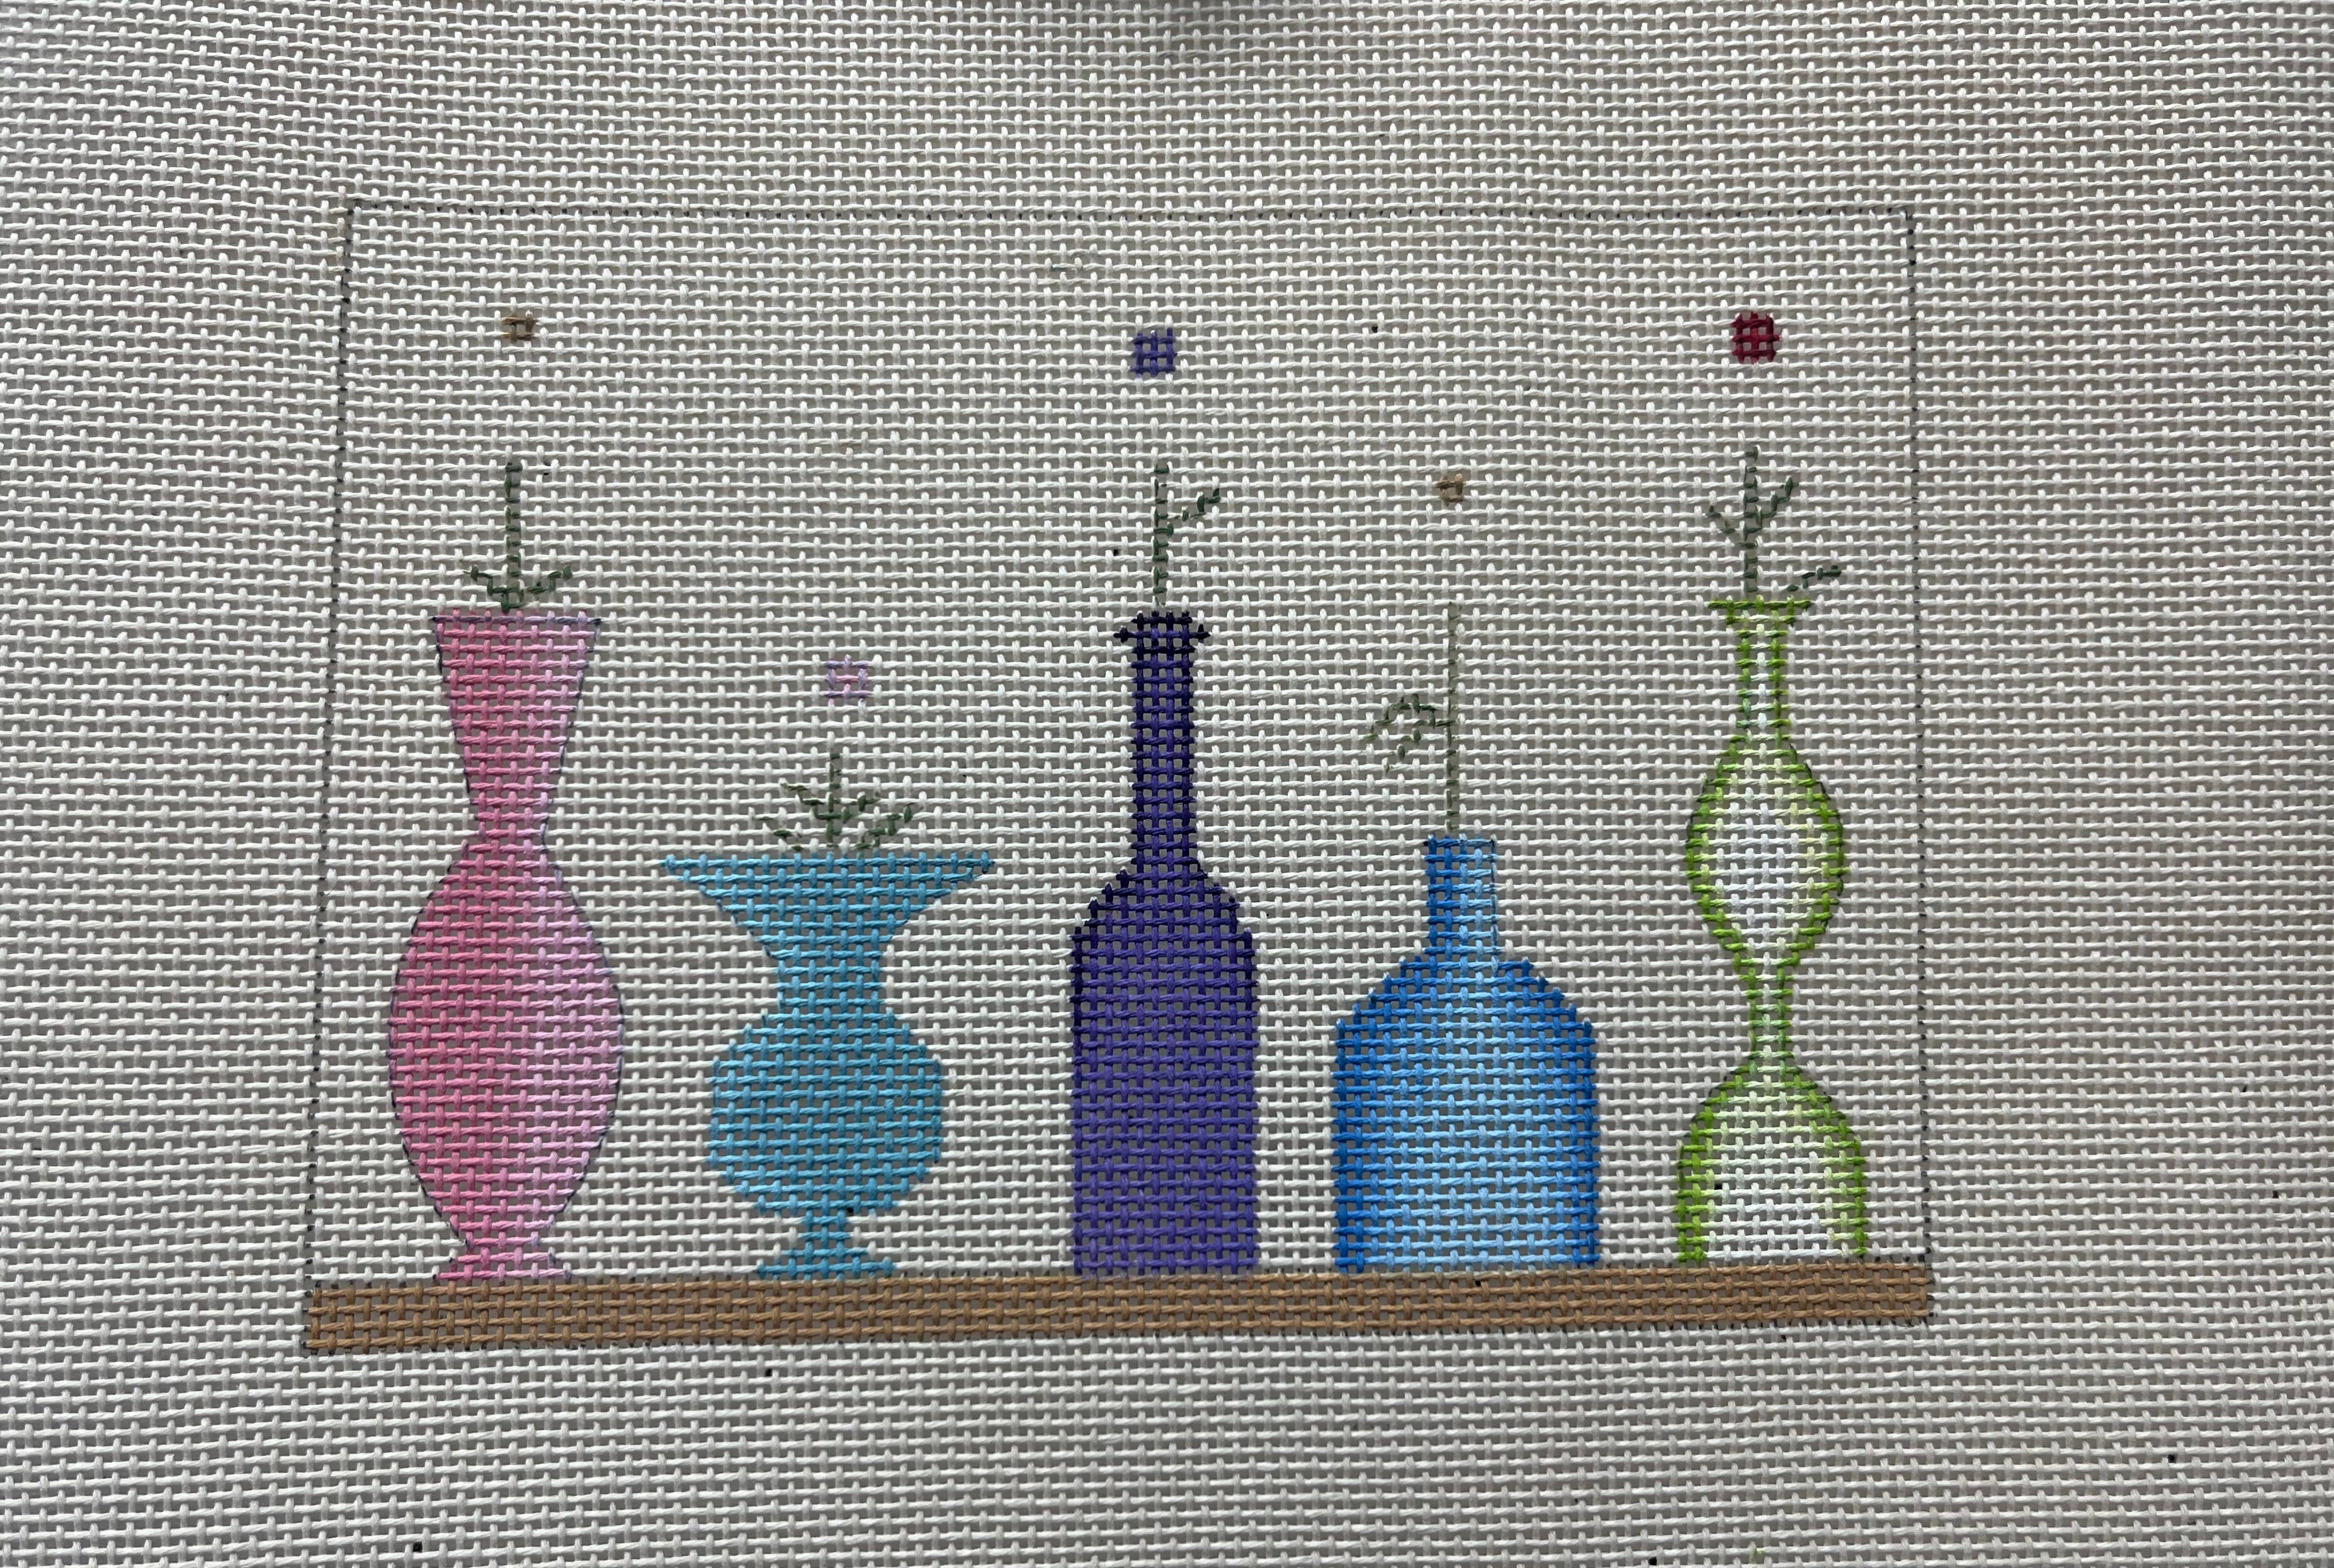 Mini Vases and Stitch Guide